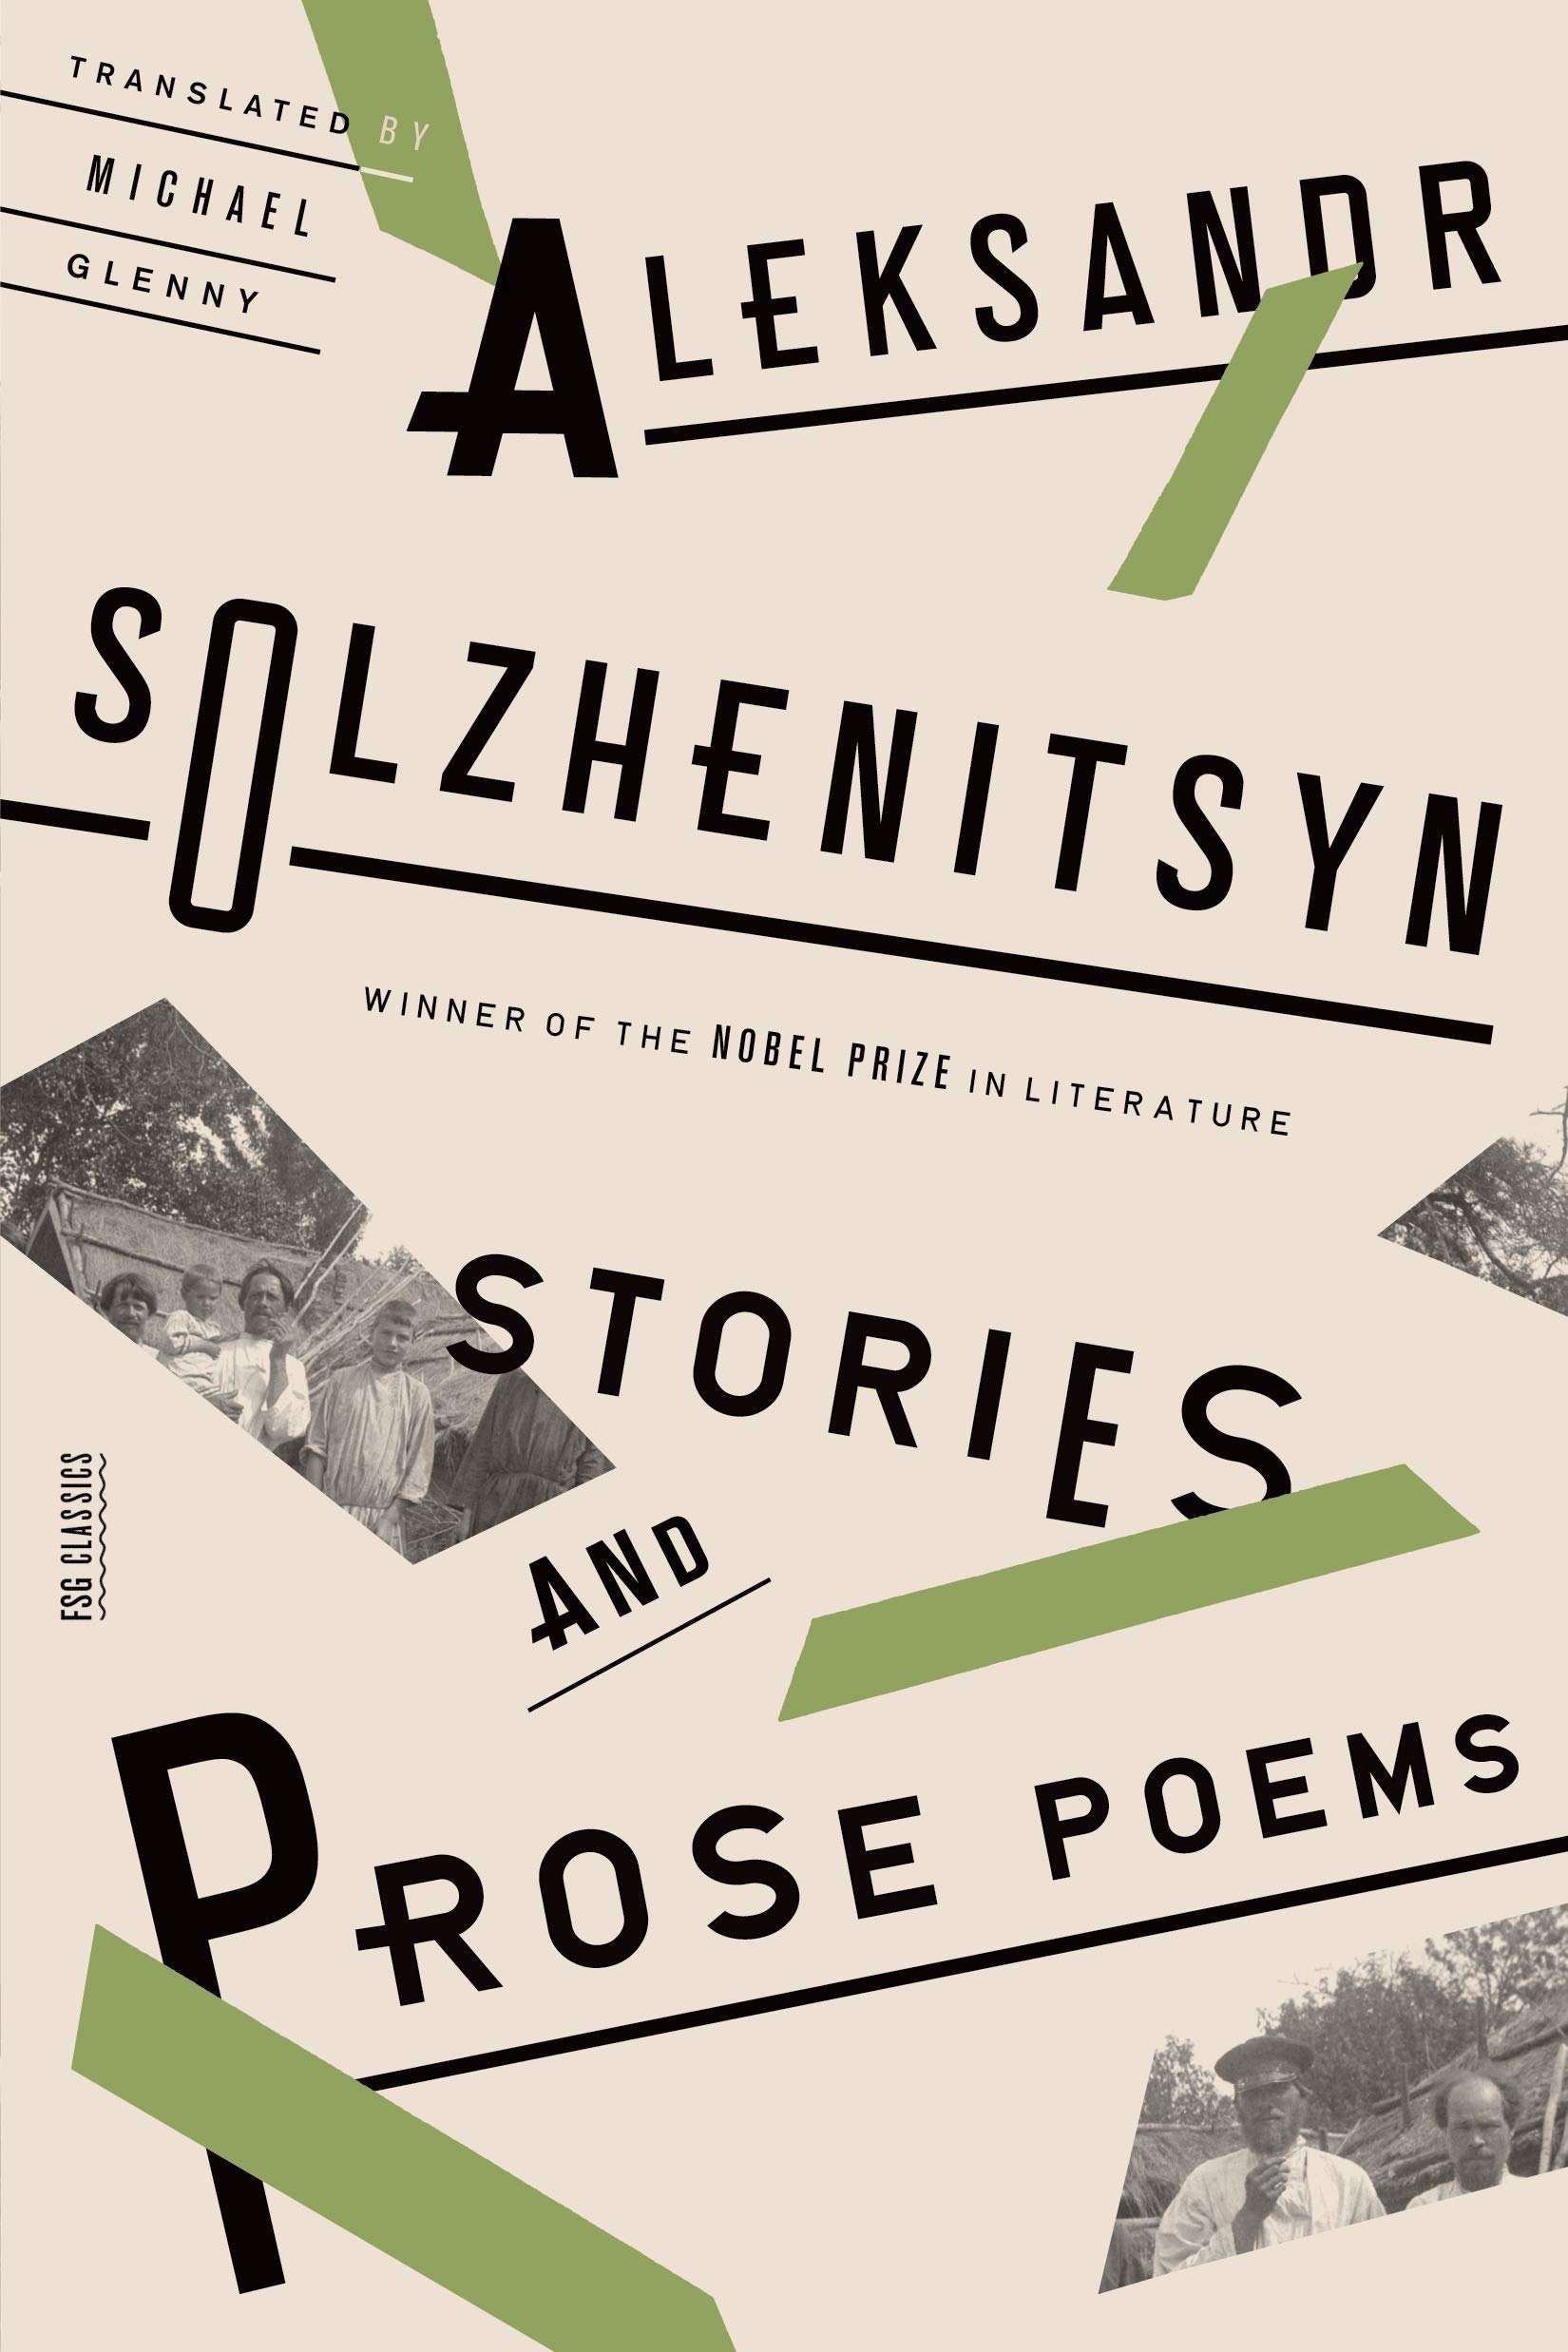 Solzhenitsyn A. - Stories and Prose Poems